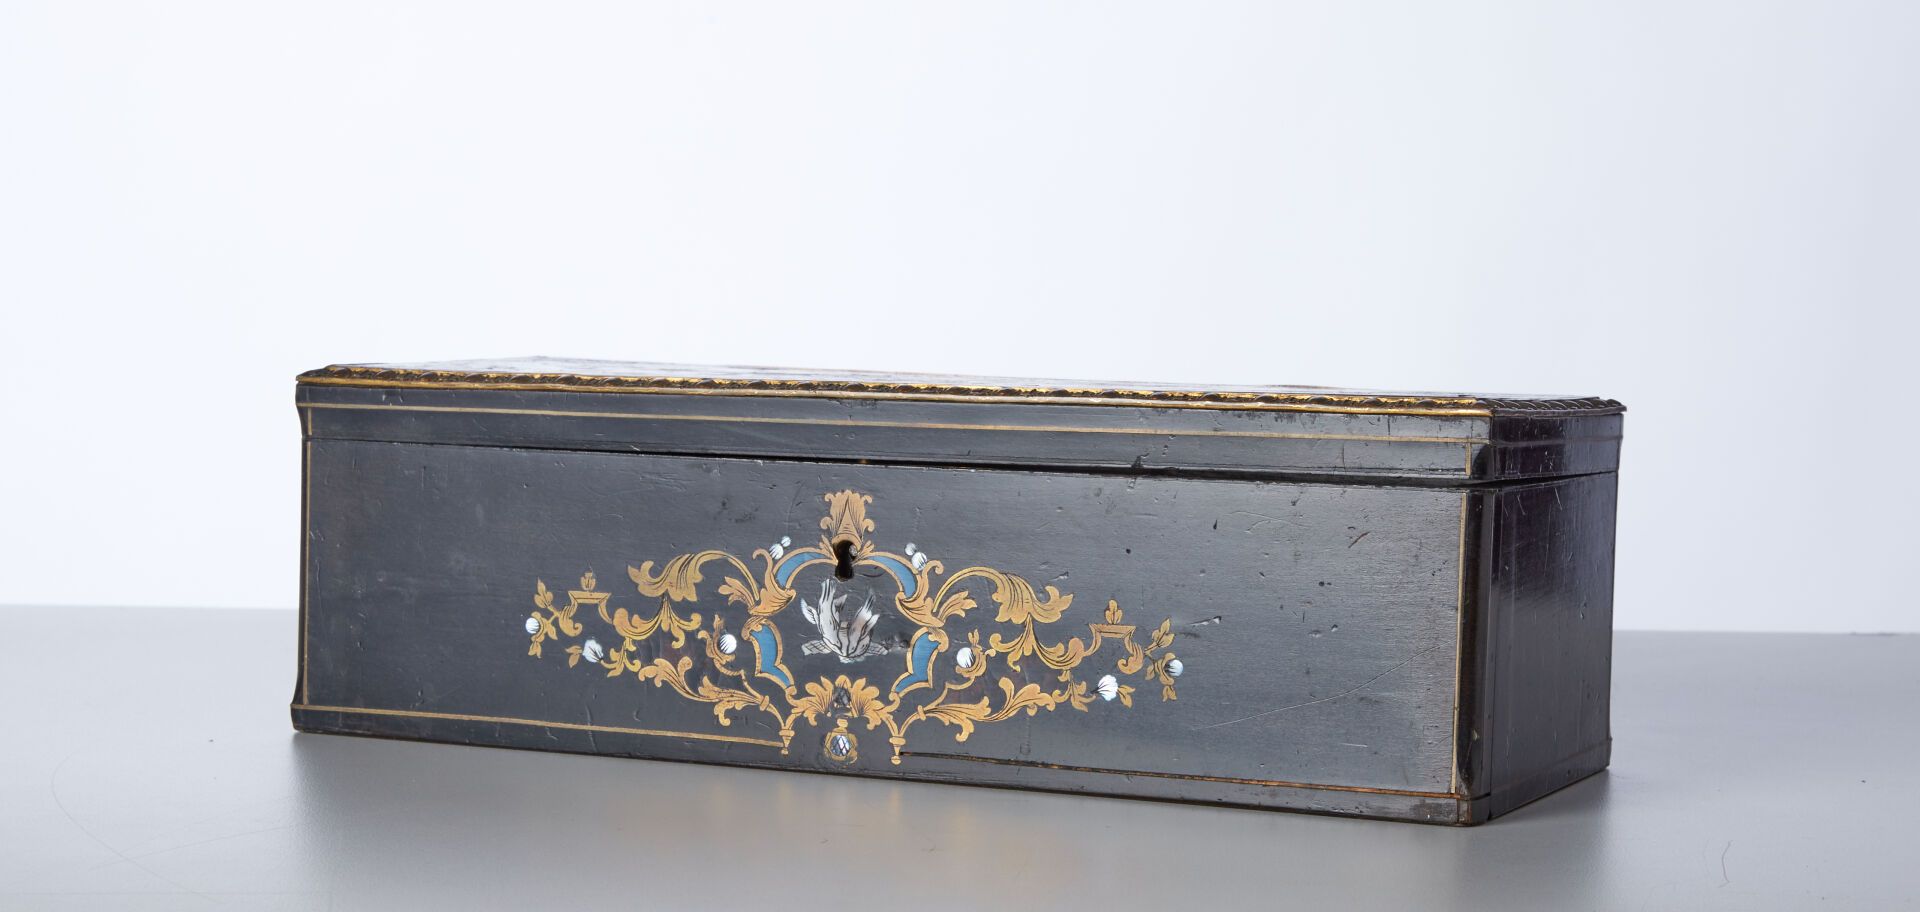 Null 一个布勒风格的黑化木和镶嵌盒。内部为紫檀木。

拿破仑三世时期 - 高 : 7,5 - 26,5x10